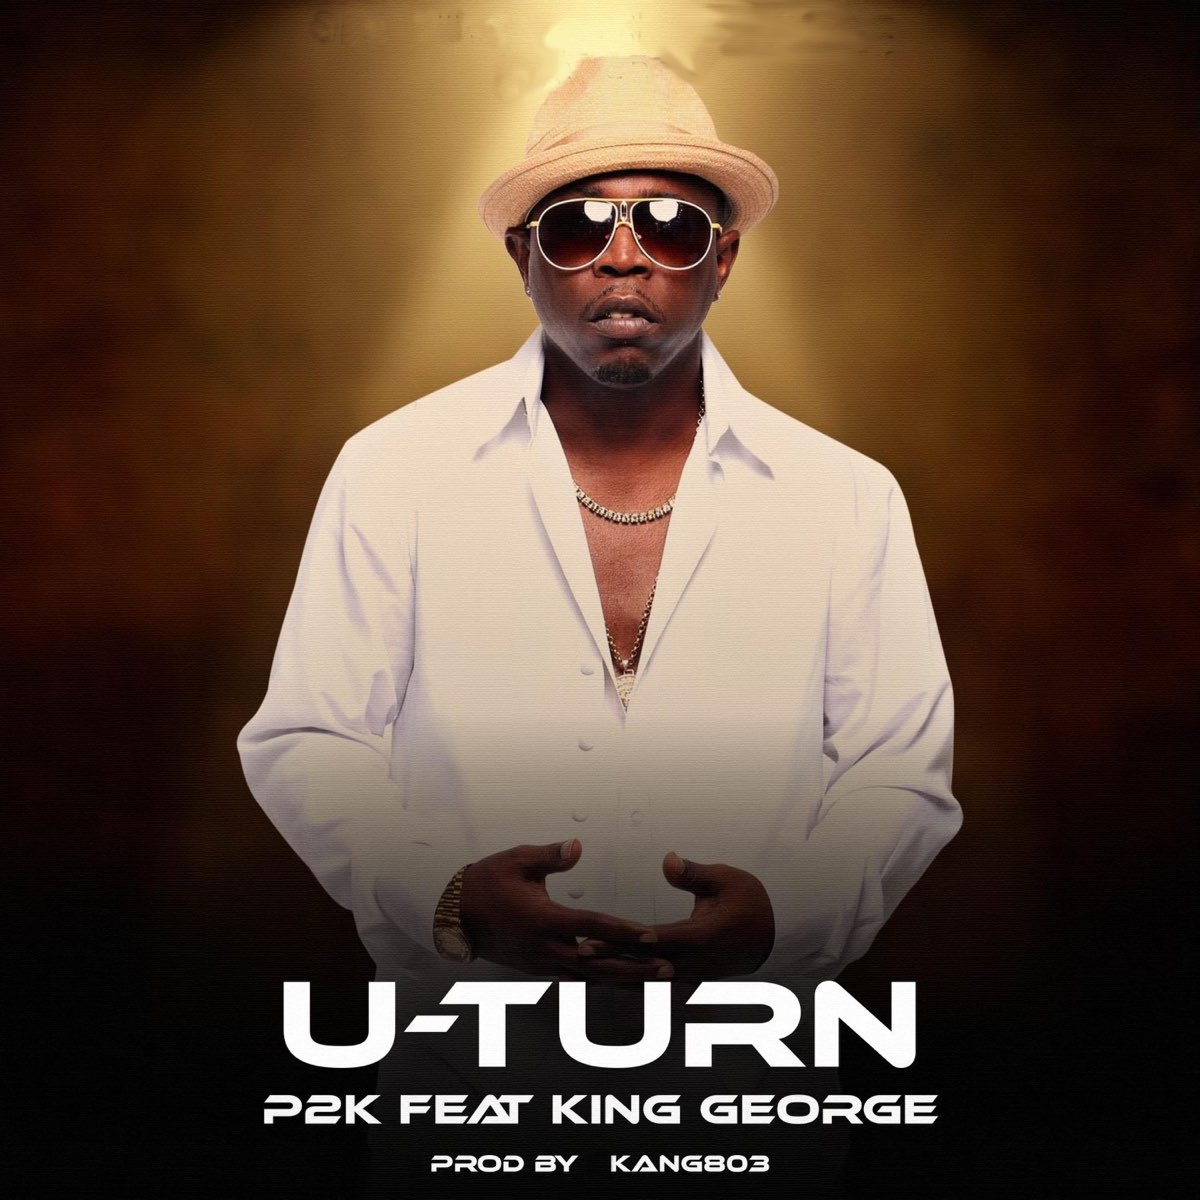 P2K Ft King George - U-Turn Slowed & Chopped Southern Soul Mix